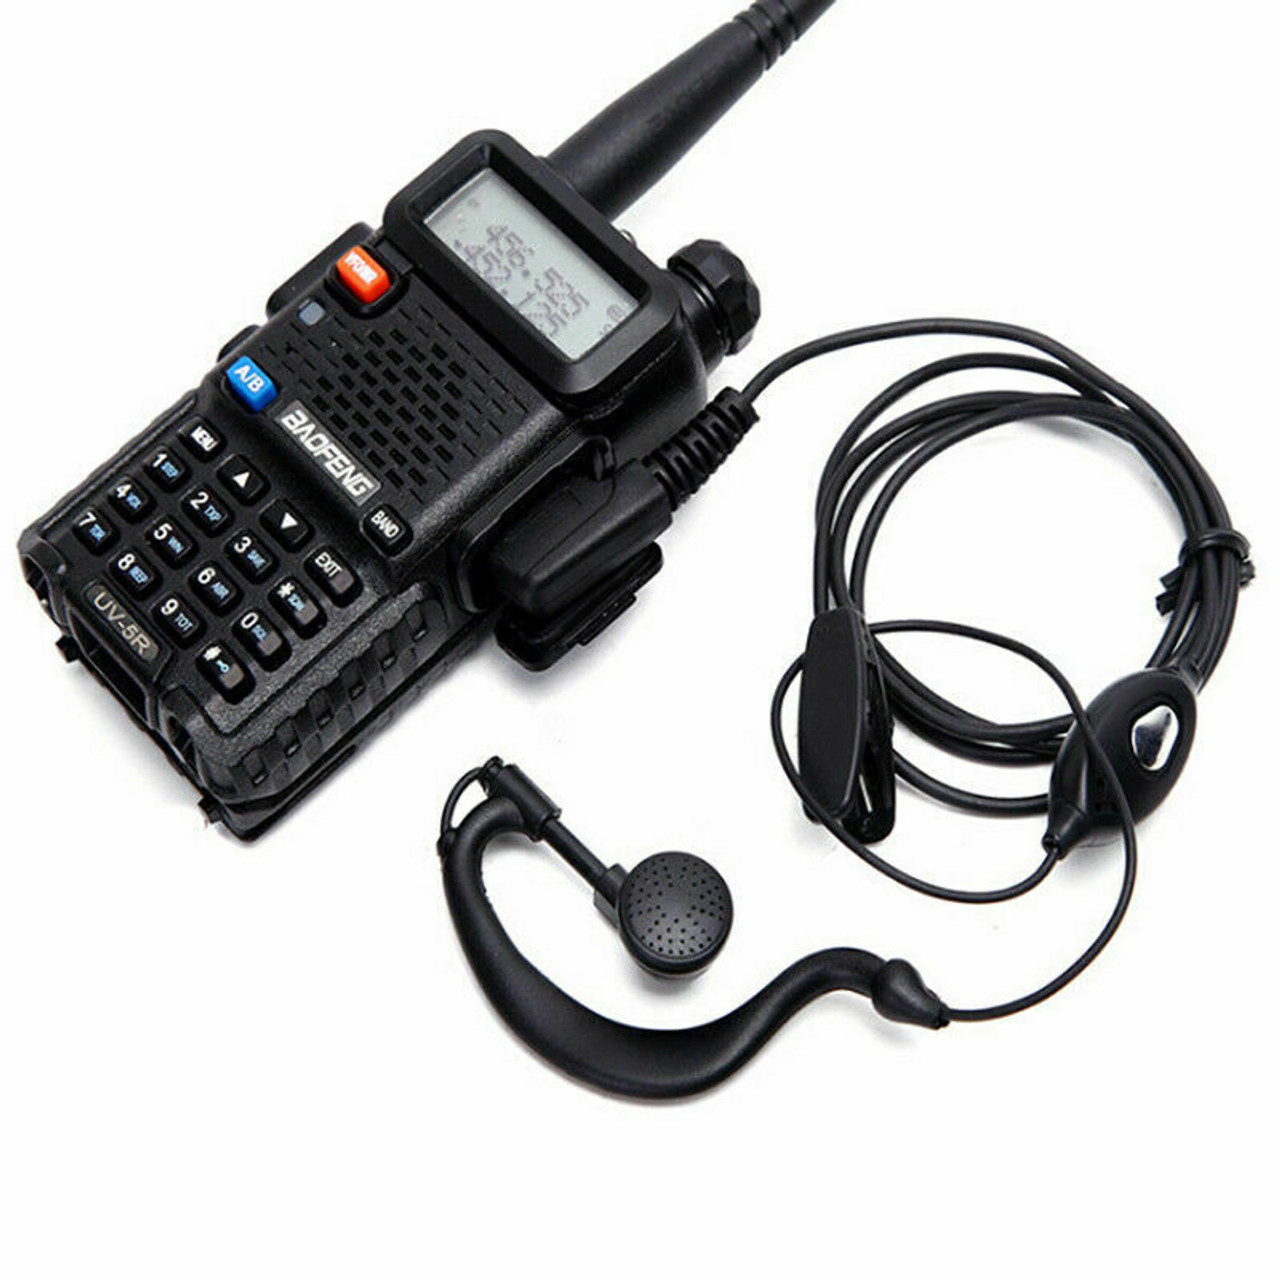 BVMAG Oreillette pour talkie-walkie avec micro, en forme de D 2 broches  pour Baofeng BF-888S UV-5R BF-F8HP BF-F9 UV-82 UV-82HP UV-82C Kenwood  TK-2107